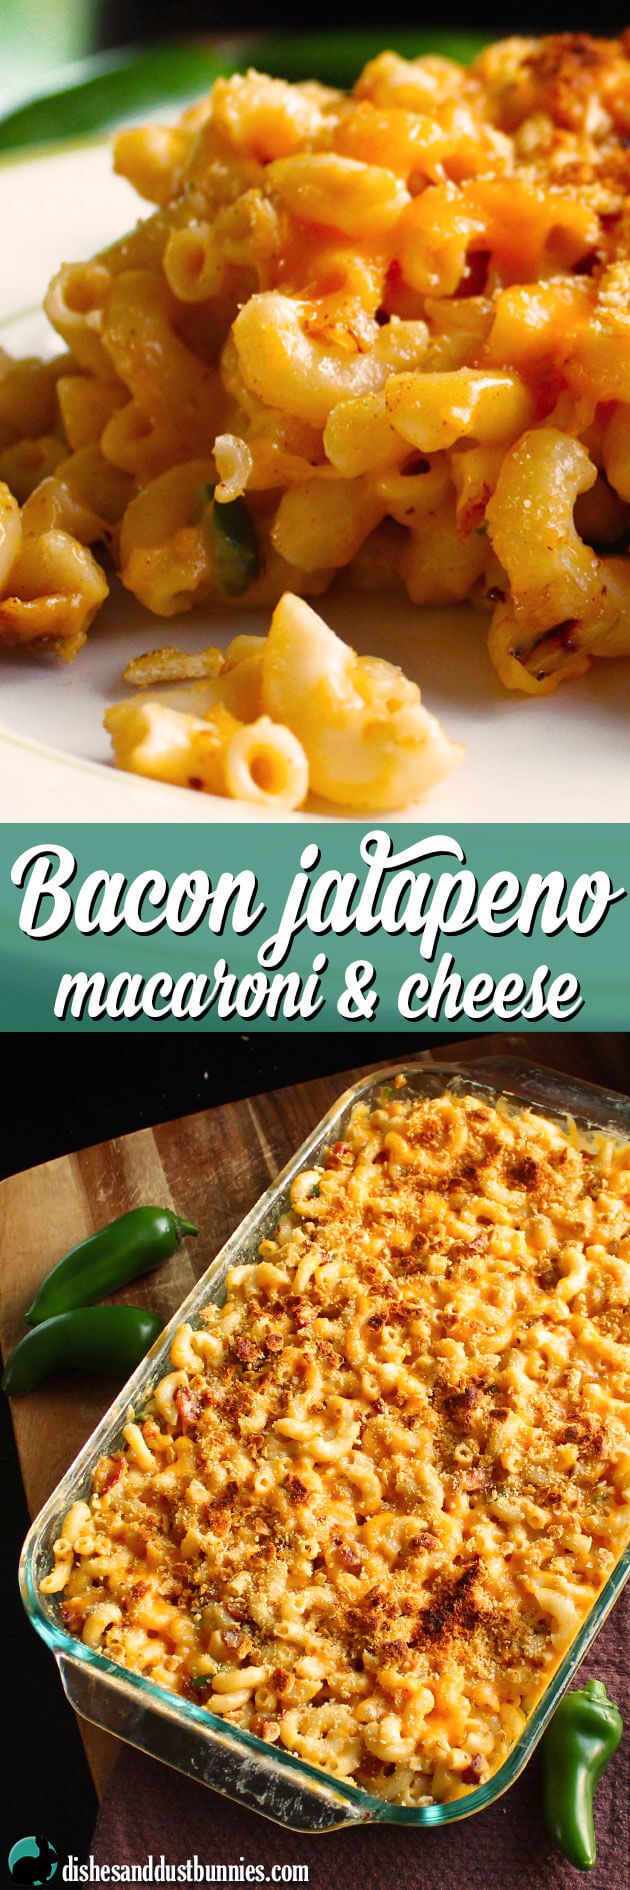 Bacon Jalapeno Macaroni and Cheese